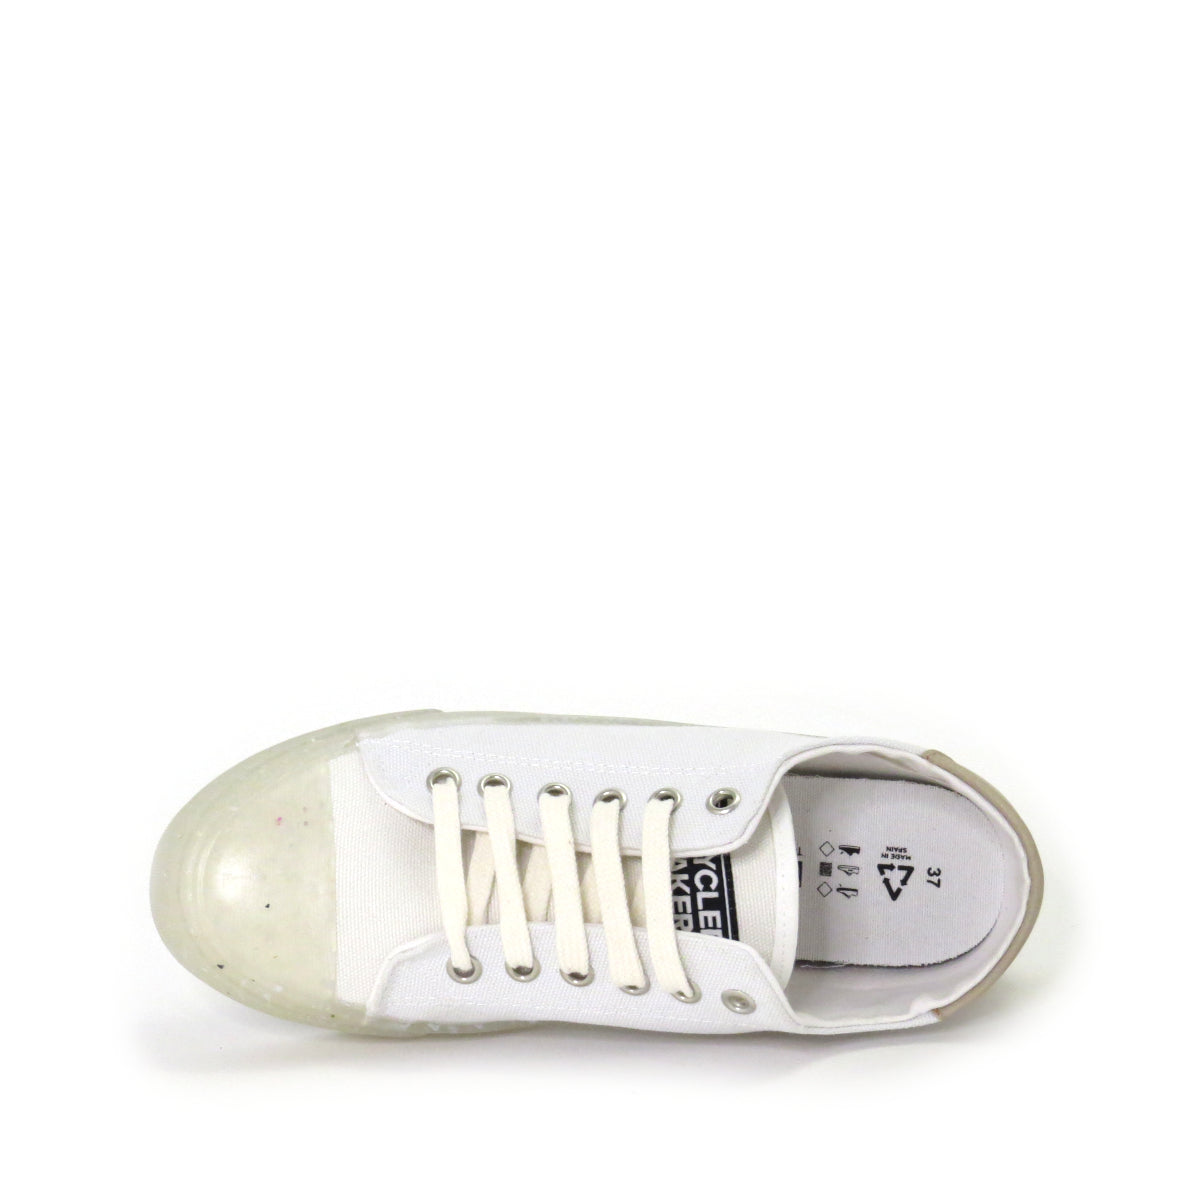 Camdem - shoe&amp;me - Recykers - Sneaker - Eco Collection, Sneaker, Summer 2020, Womens